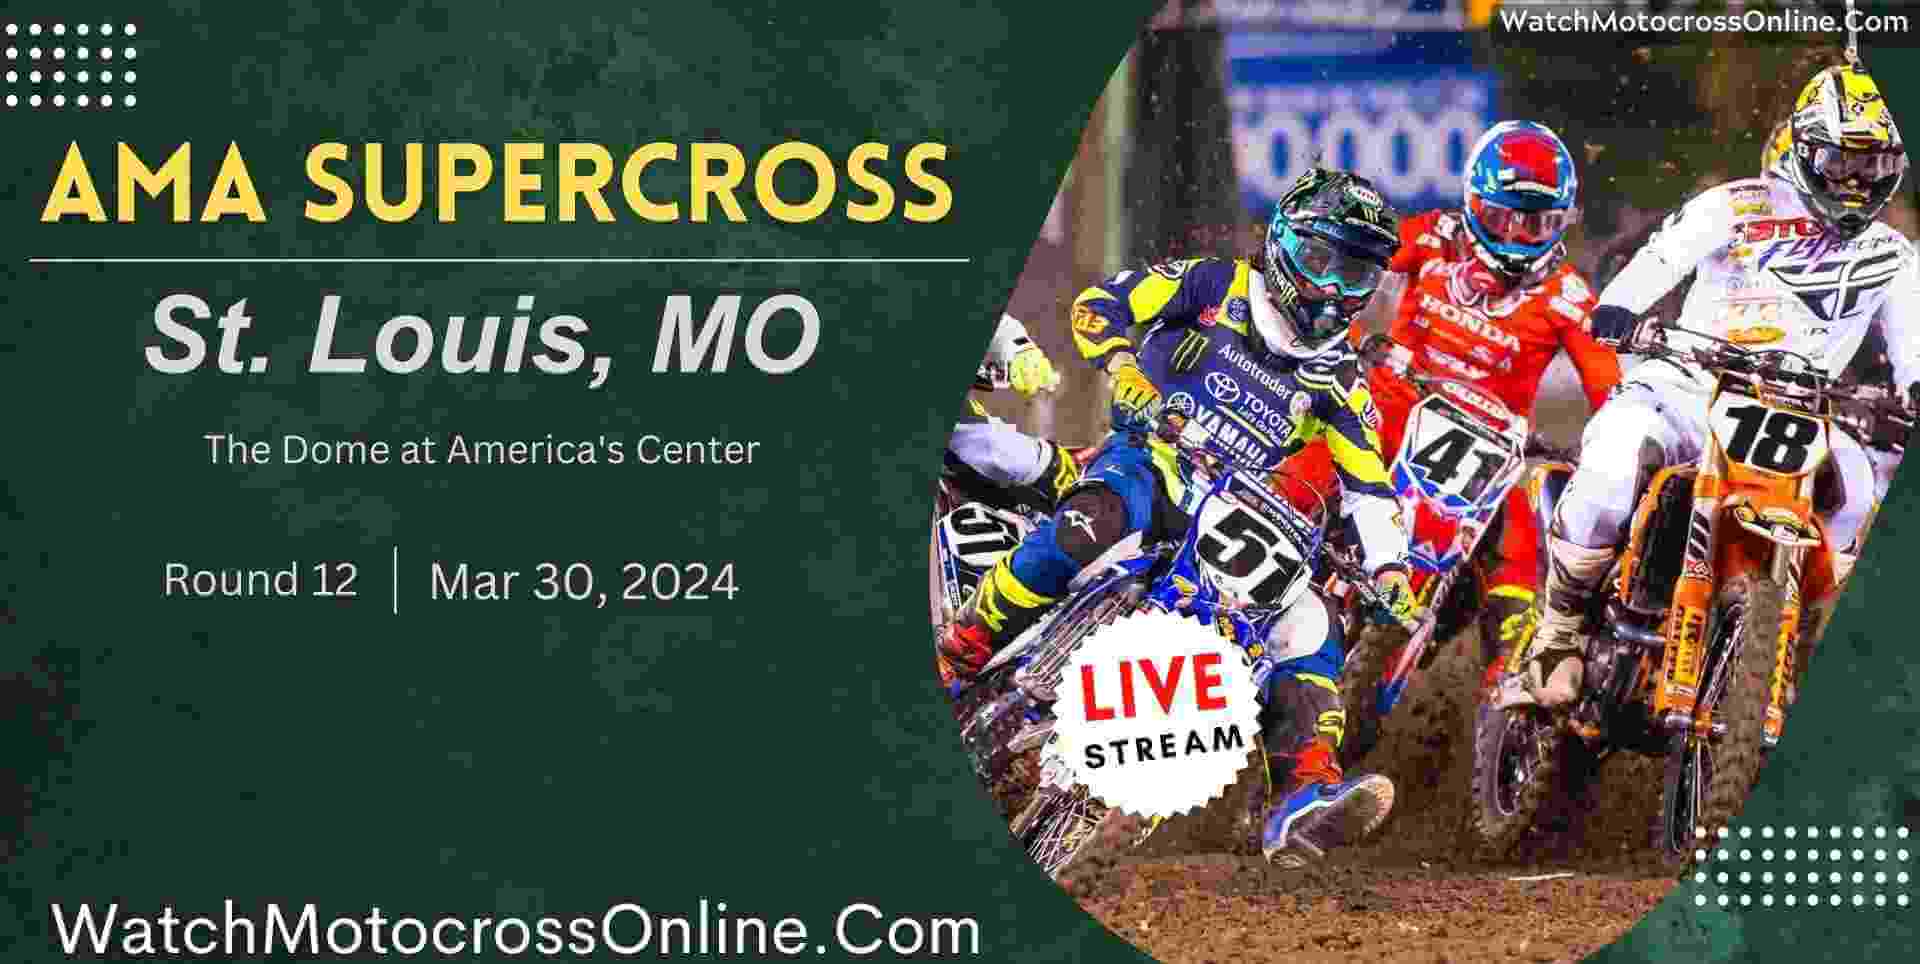 AMA Supercross St. Louis Live Stream 2024 Round 12